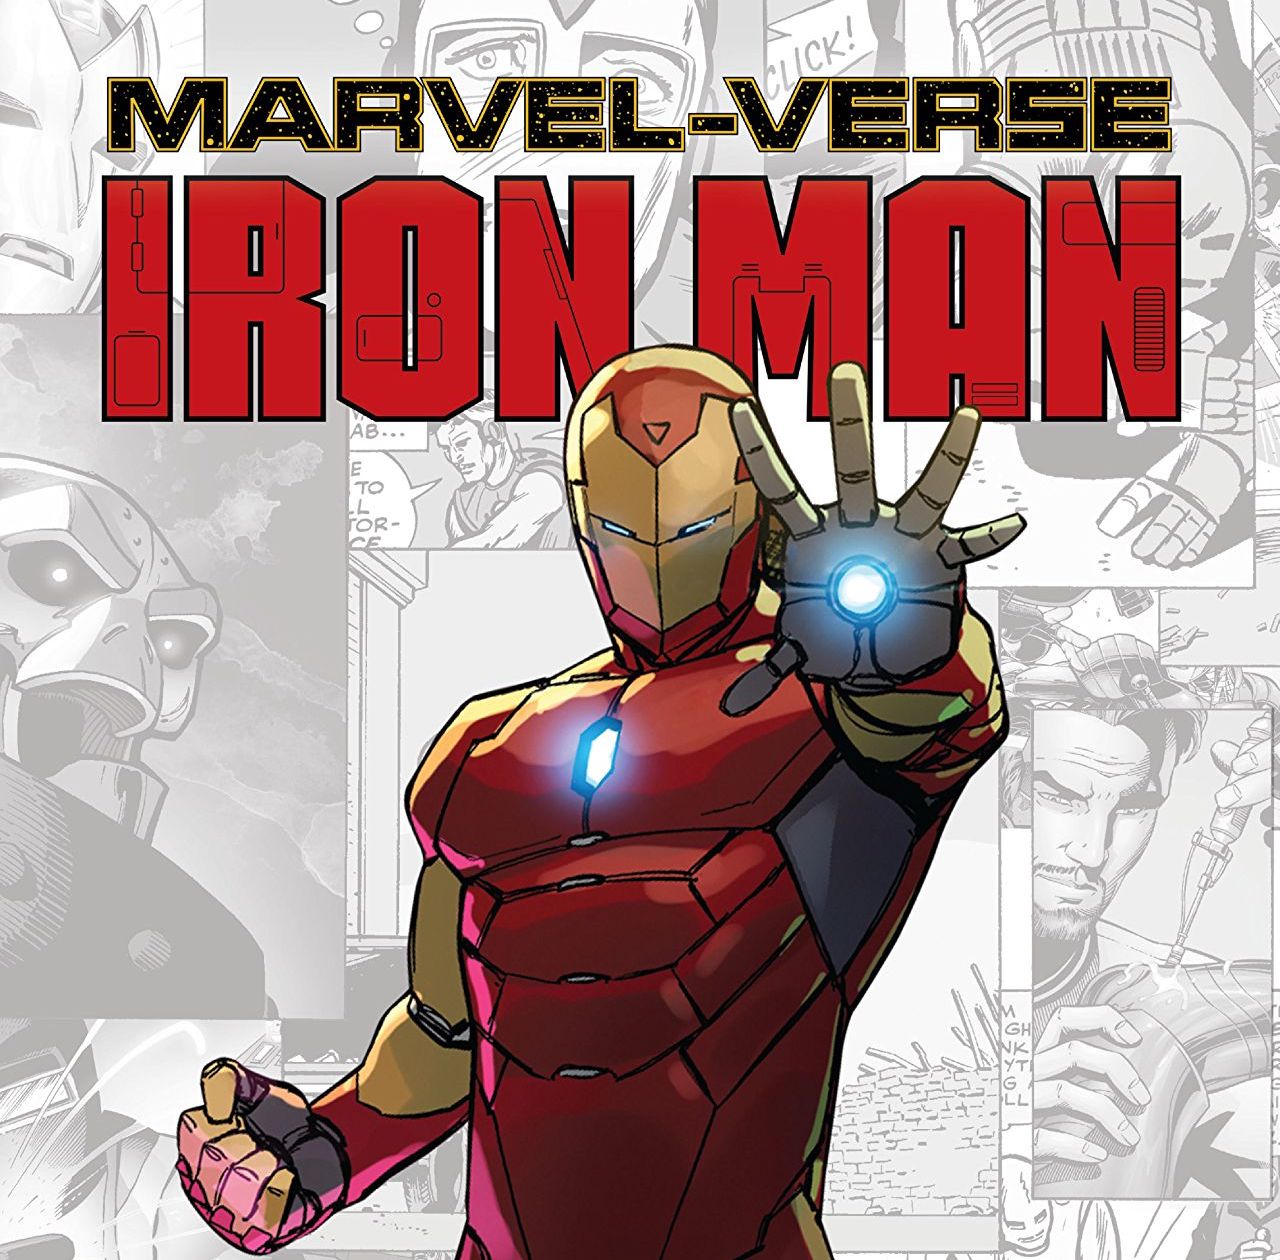 Marvel-Verse: Iron Man Review